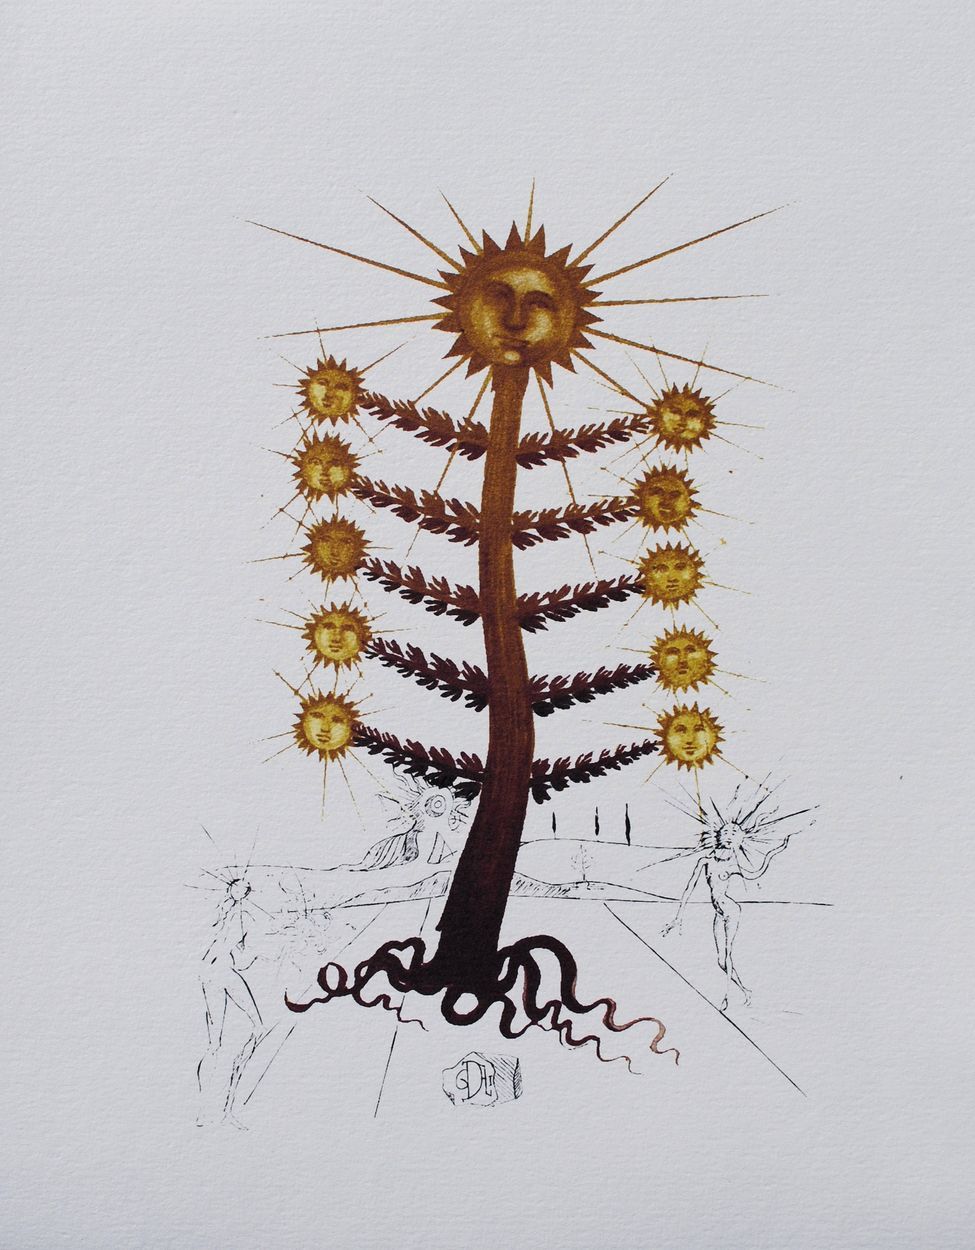 Salvador Dali Salvador DALI (1904-1989) (after)
Sun tree

Lithograph after a gou&hellip;